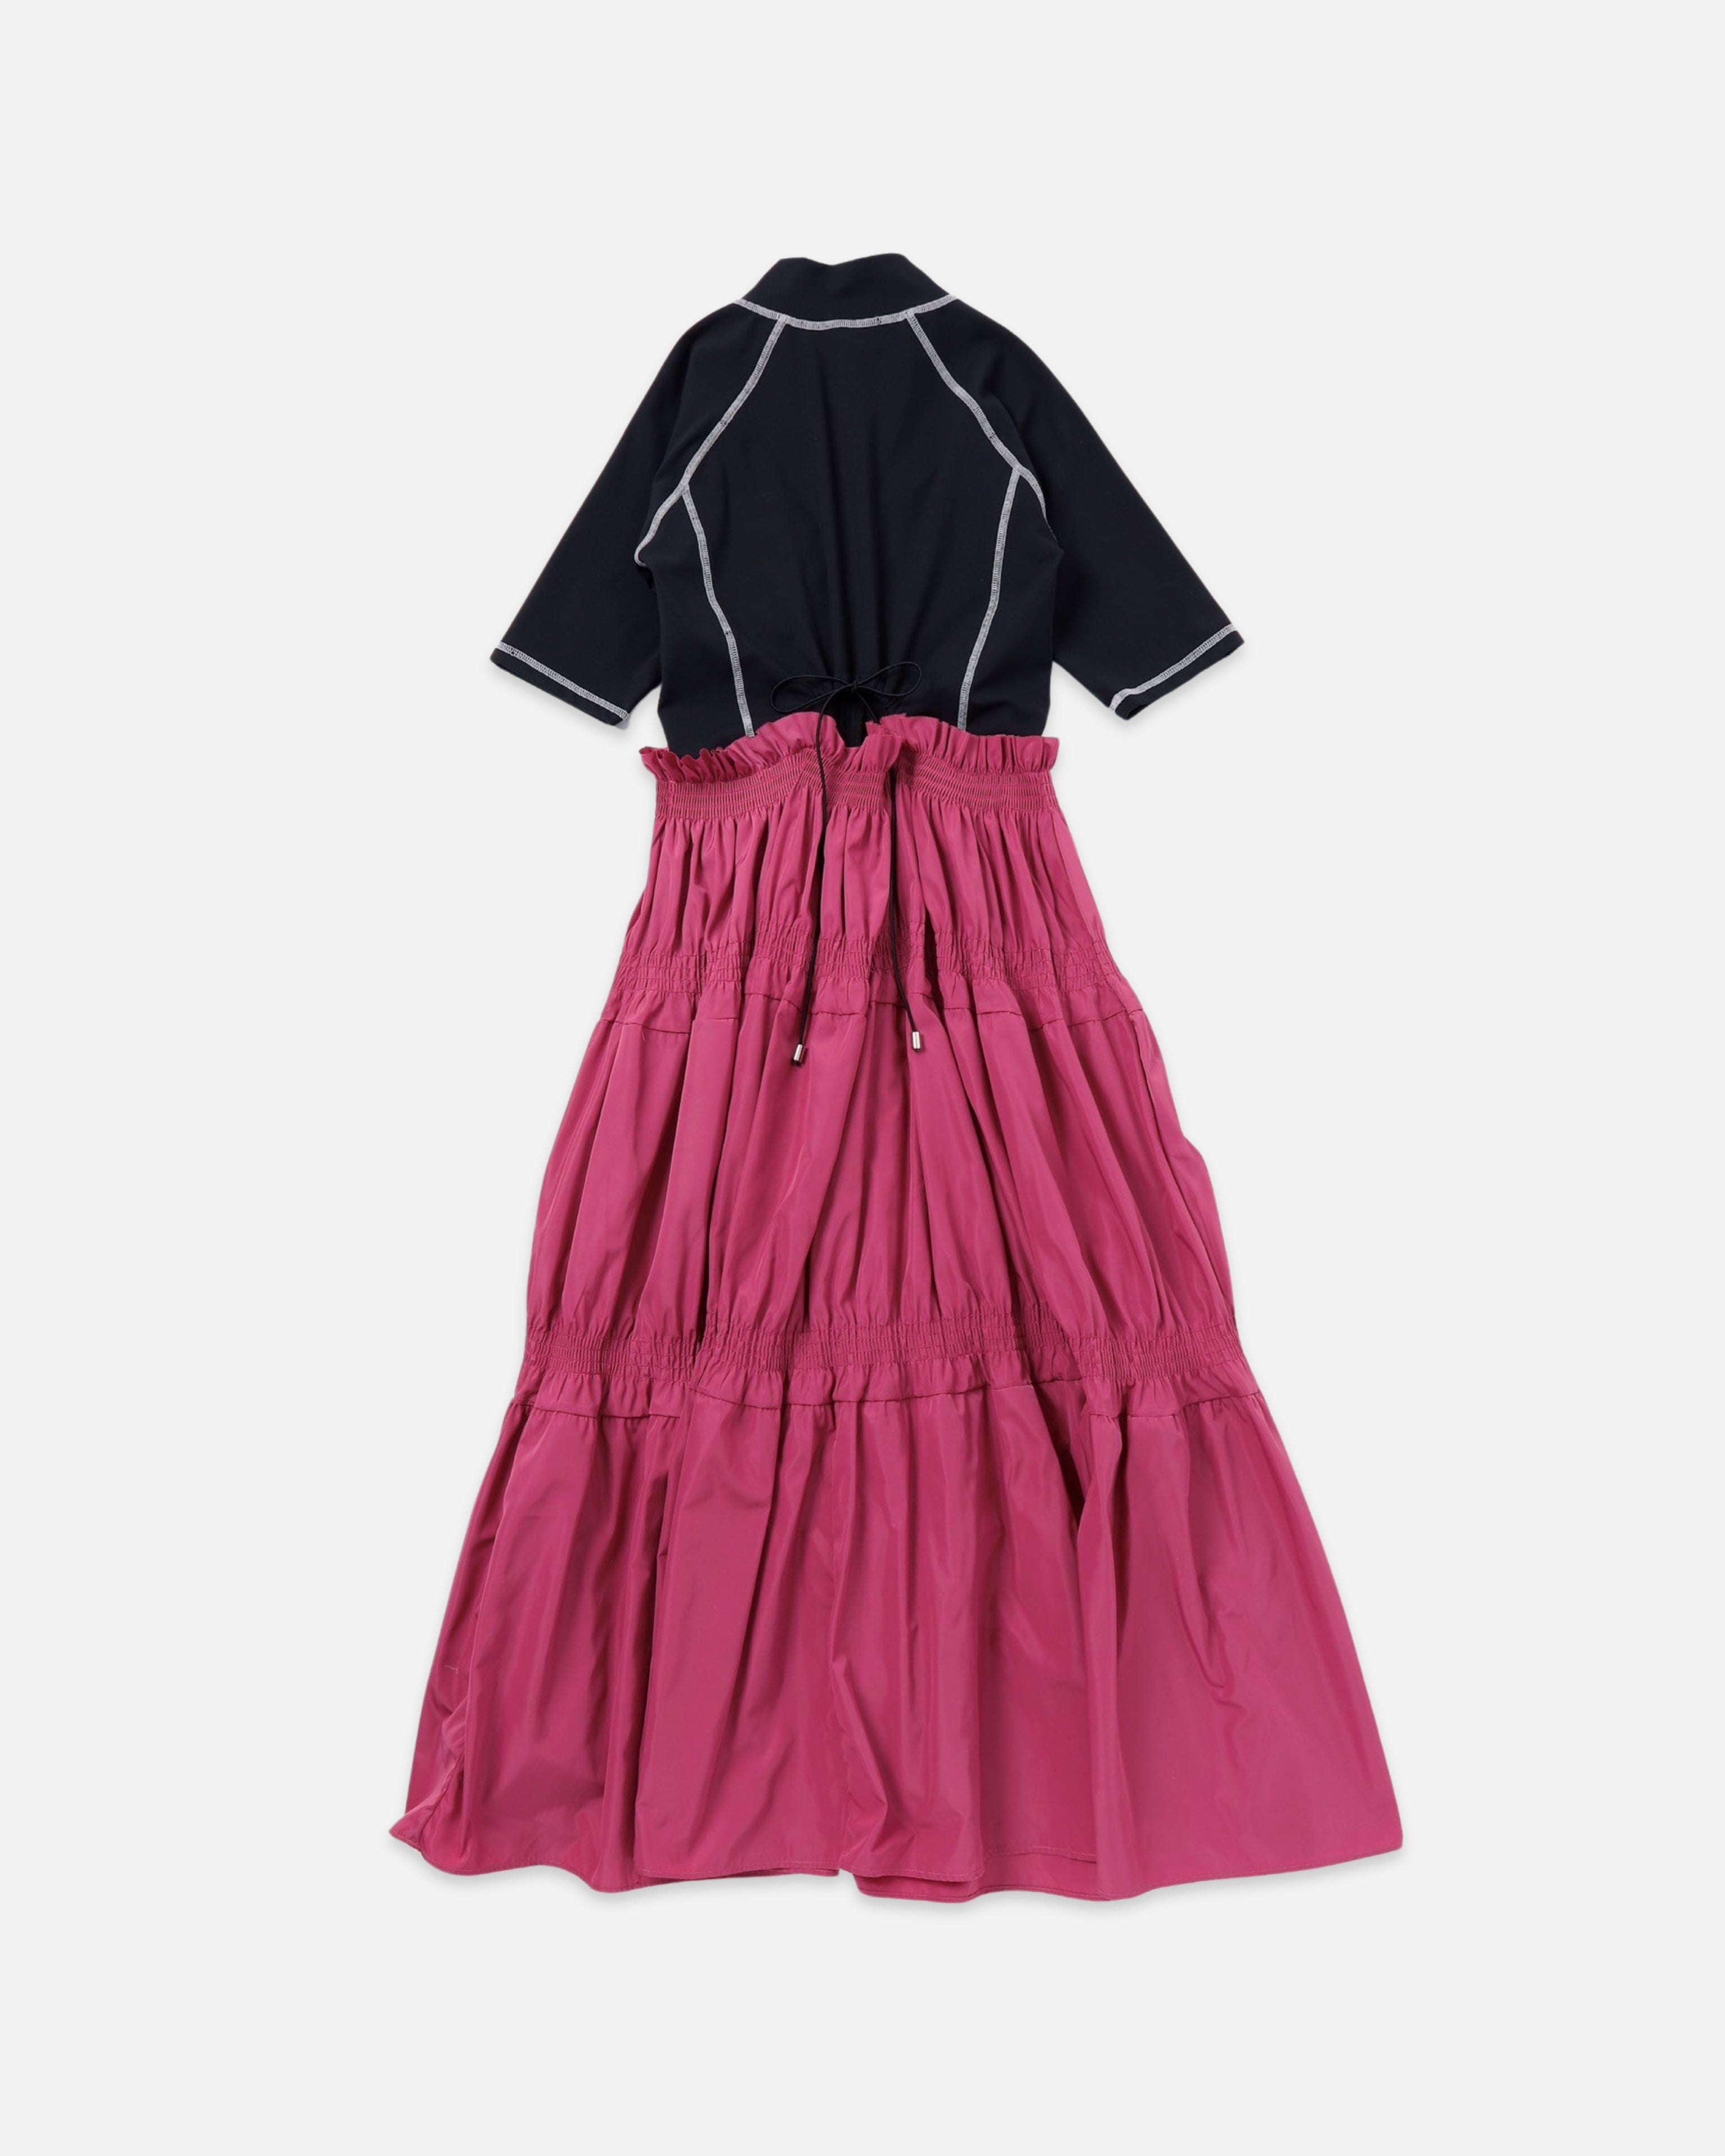 Scuba top tiered dress (black-pink)